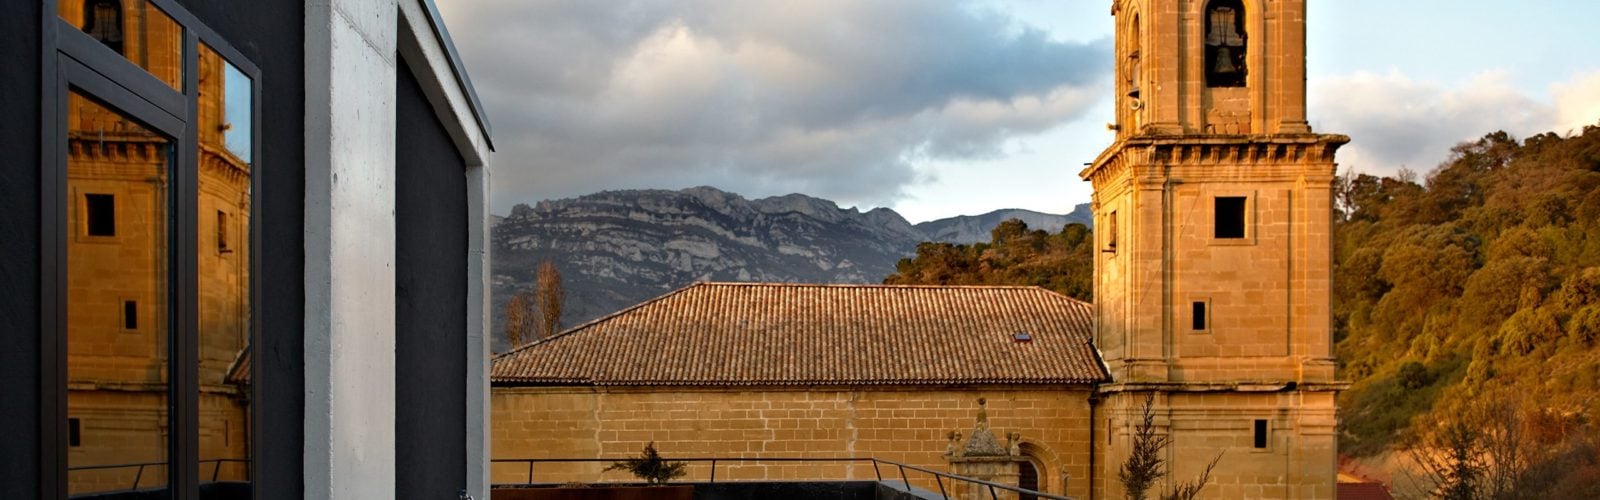 Restaurant terrace at Hotel Viura, La Rioja, Spain